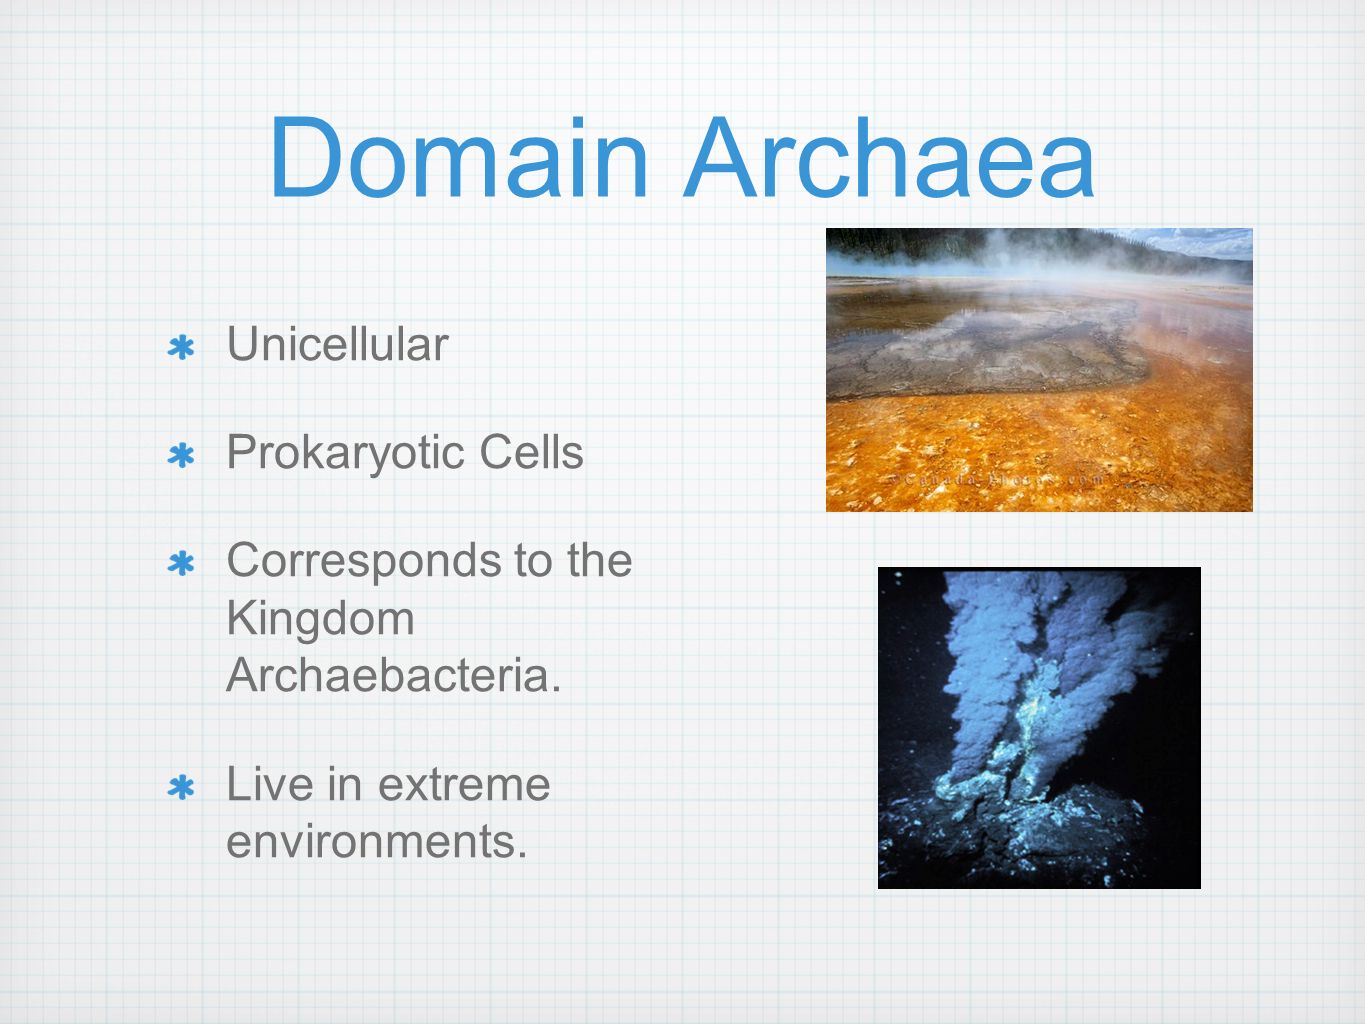 Domain Archaea Unicellular Prokaryotic Cells Corresponds to the Kingdom Archaebacteria.